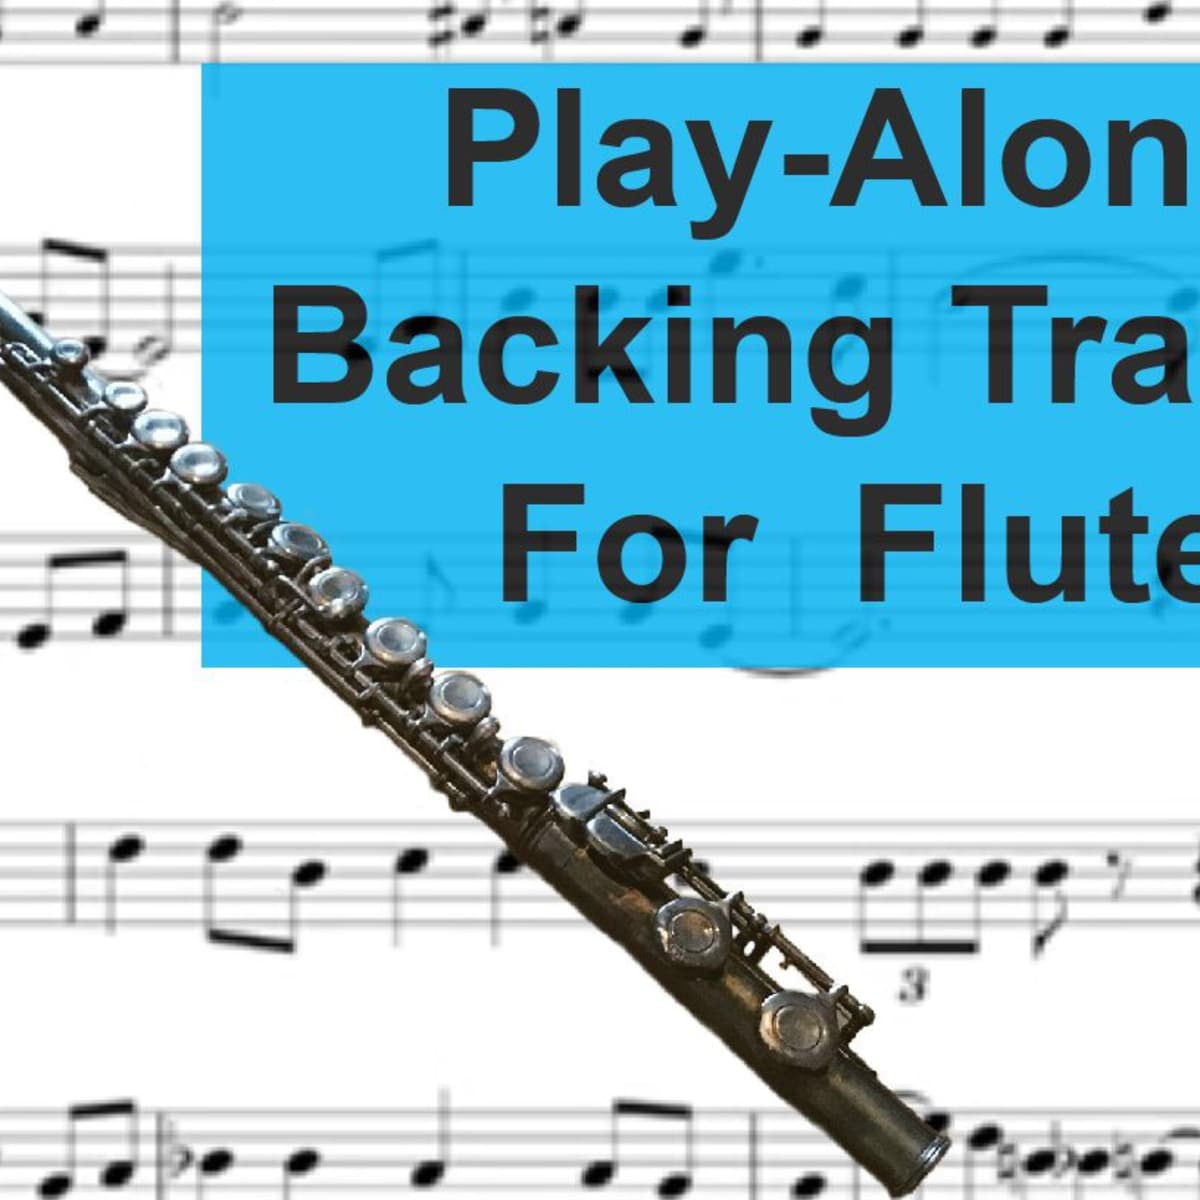 the tin flute chapter summary